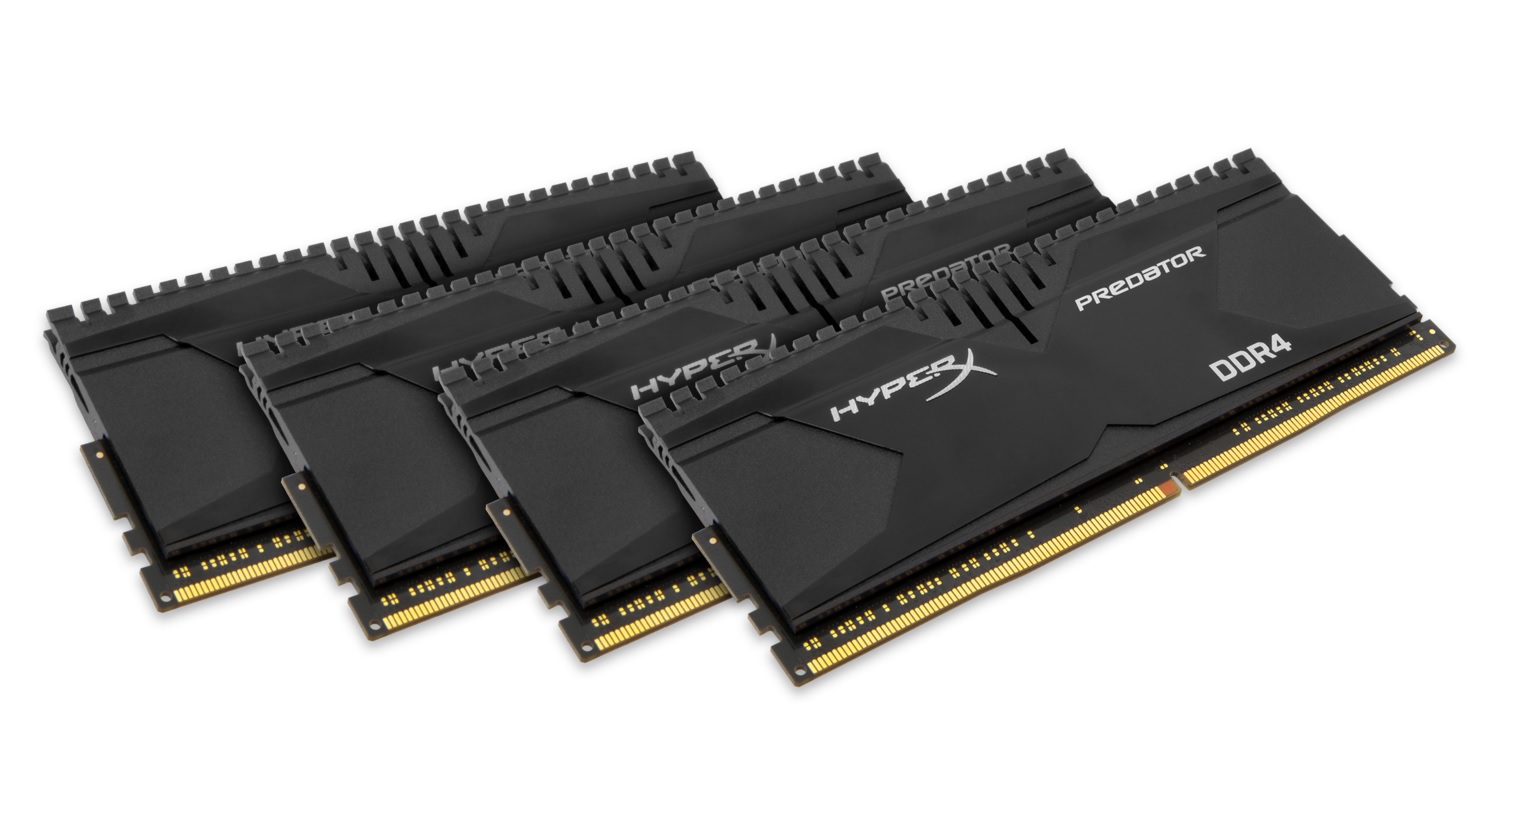 HyperX PREDATOR DDR4 3000MHz Memory Review